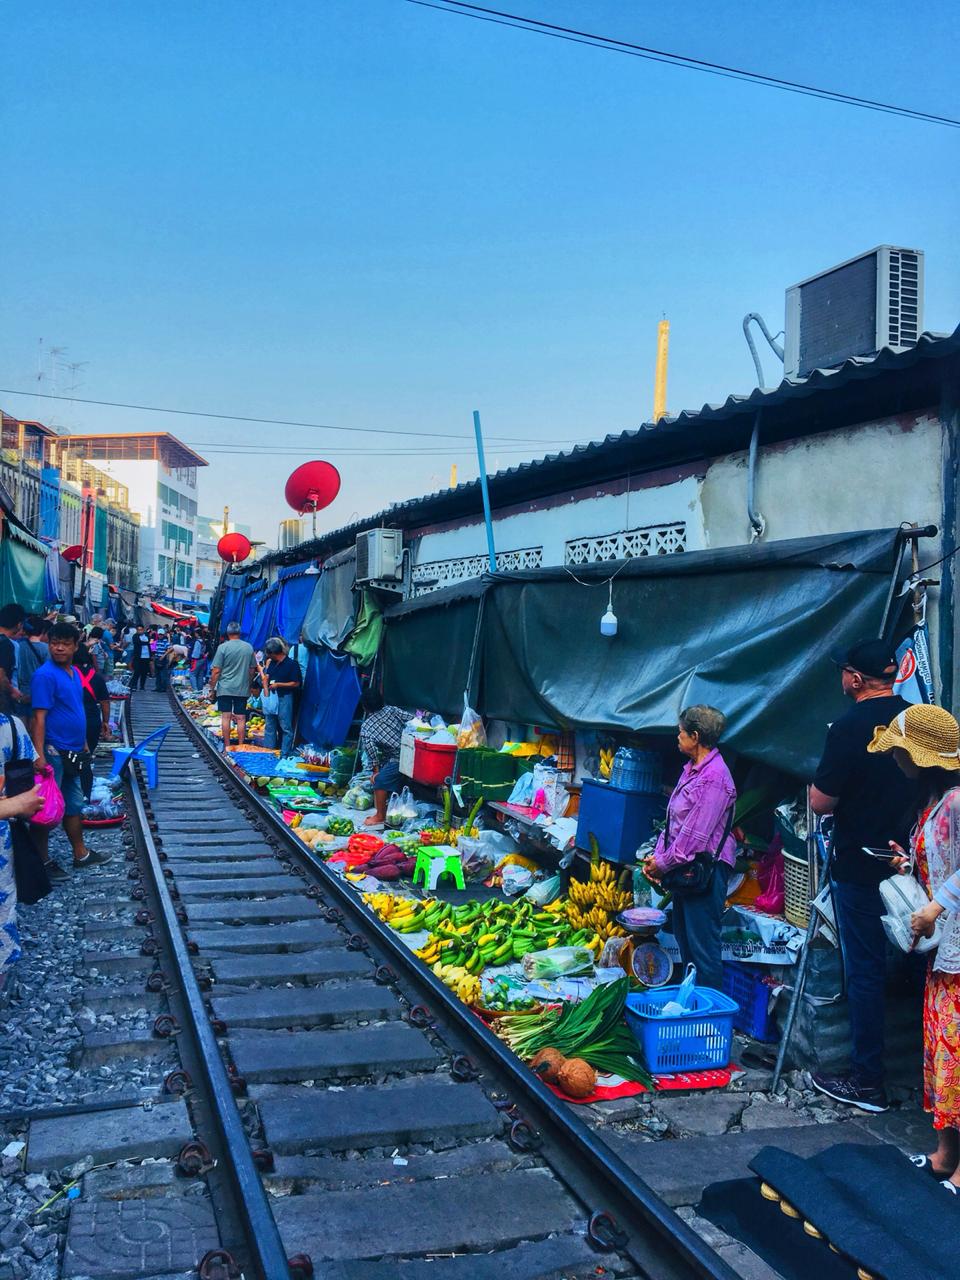 Maeklong Railway Market 